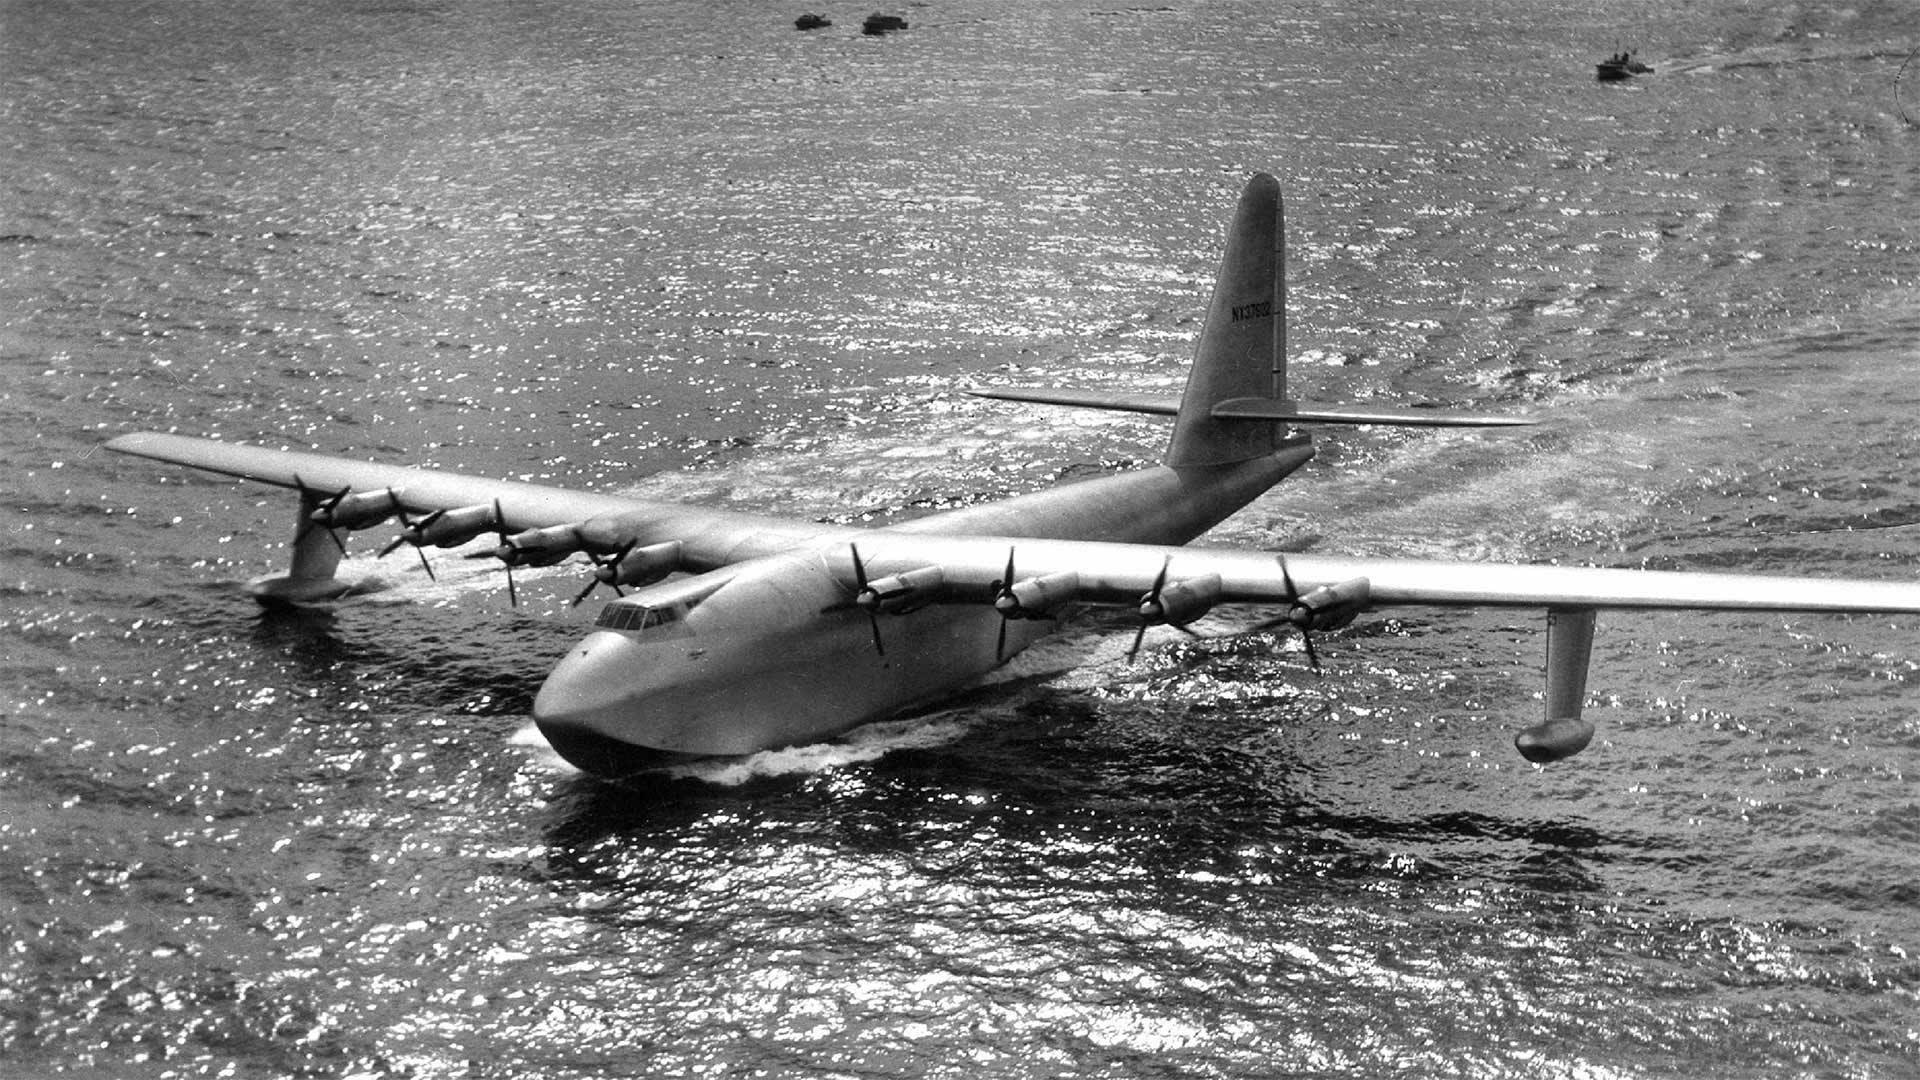 The Hughes H-4 Hercules, aka the Spruce Goose, November 1947, Long Beach Harbor, California - J R Eyerman/Shutterstock)